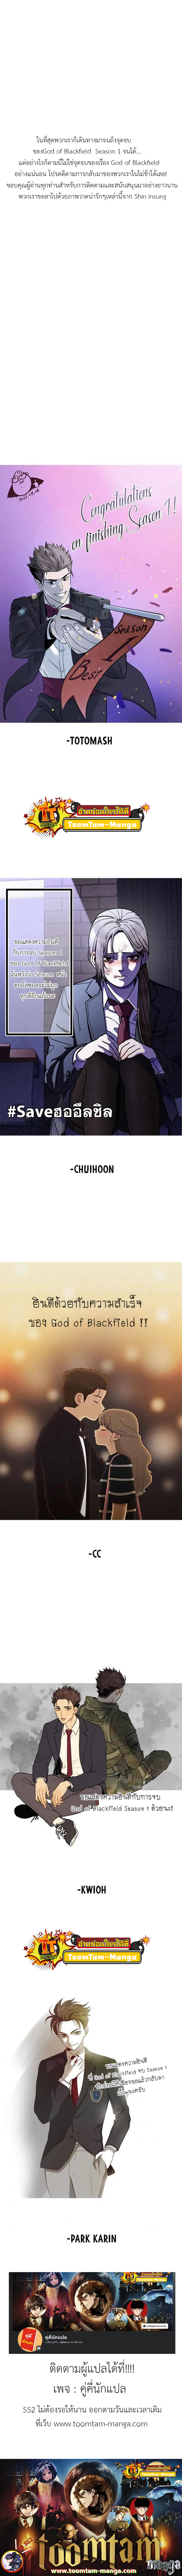 God of Blackfield89 (18)